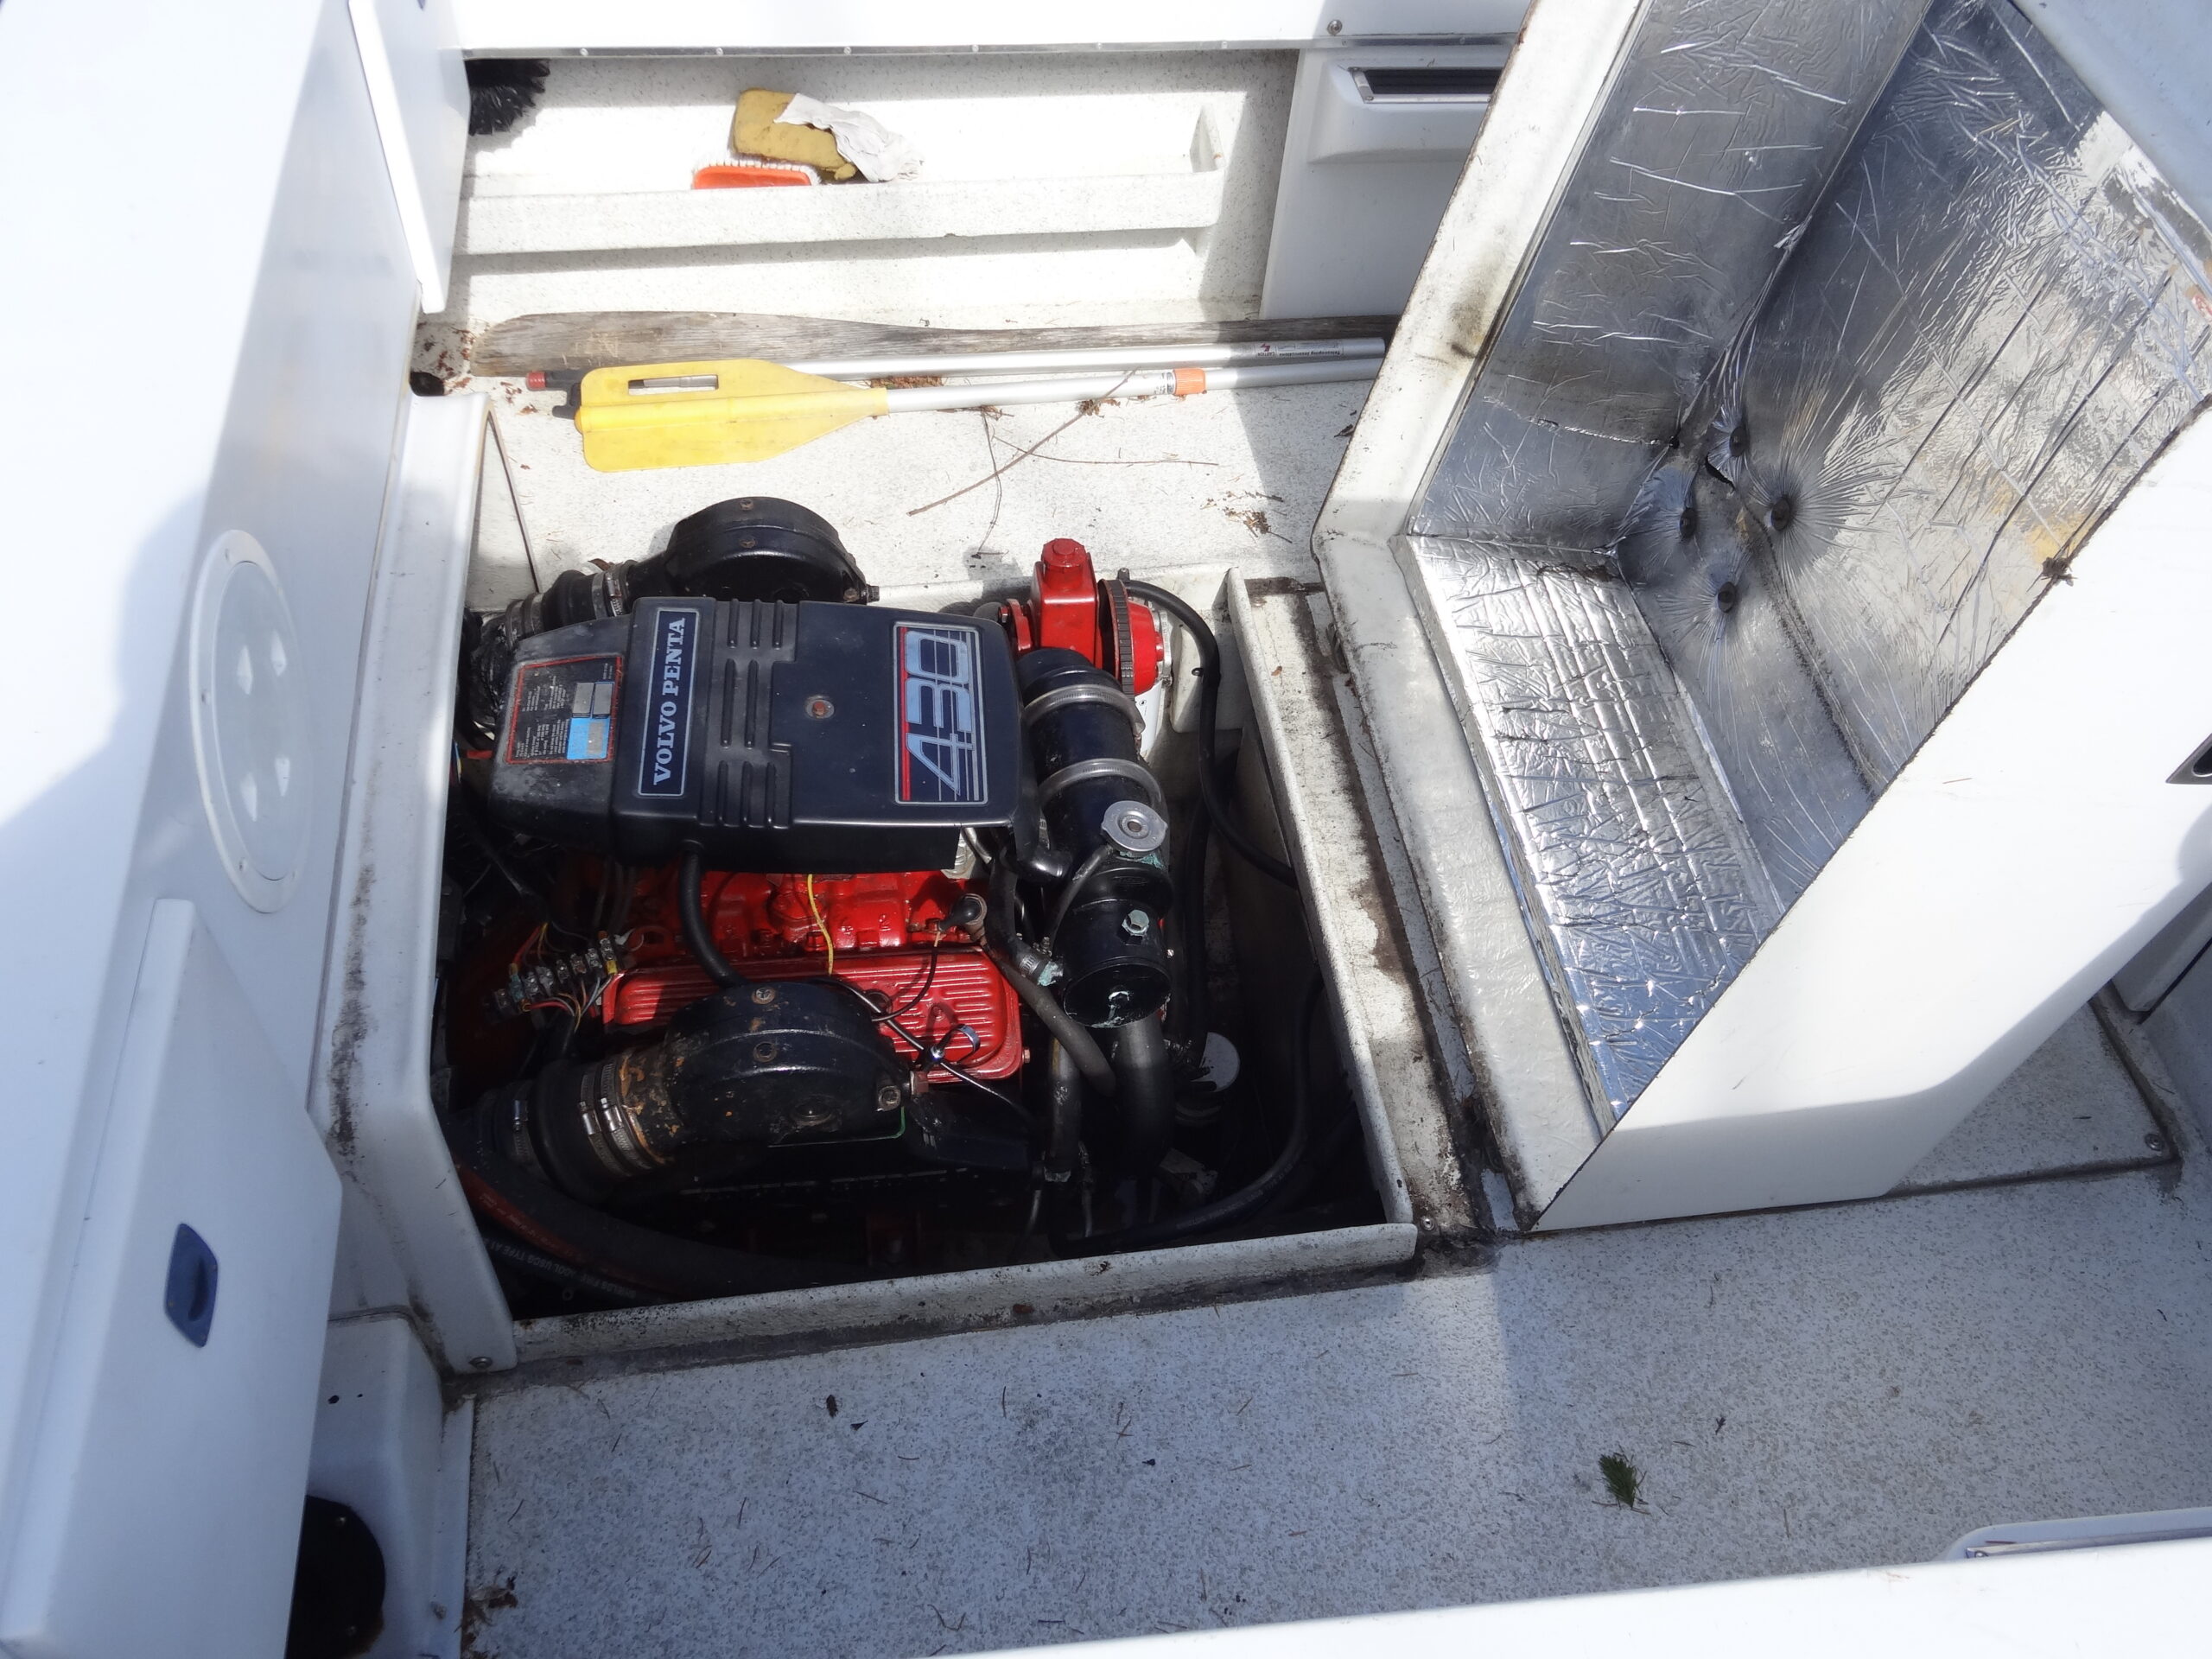 SeaSport engine compartment with Volvo Penta